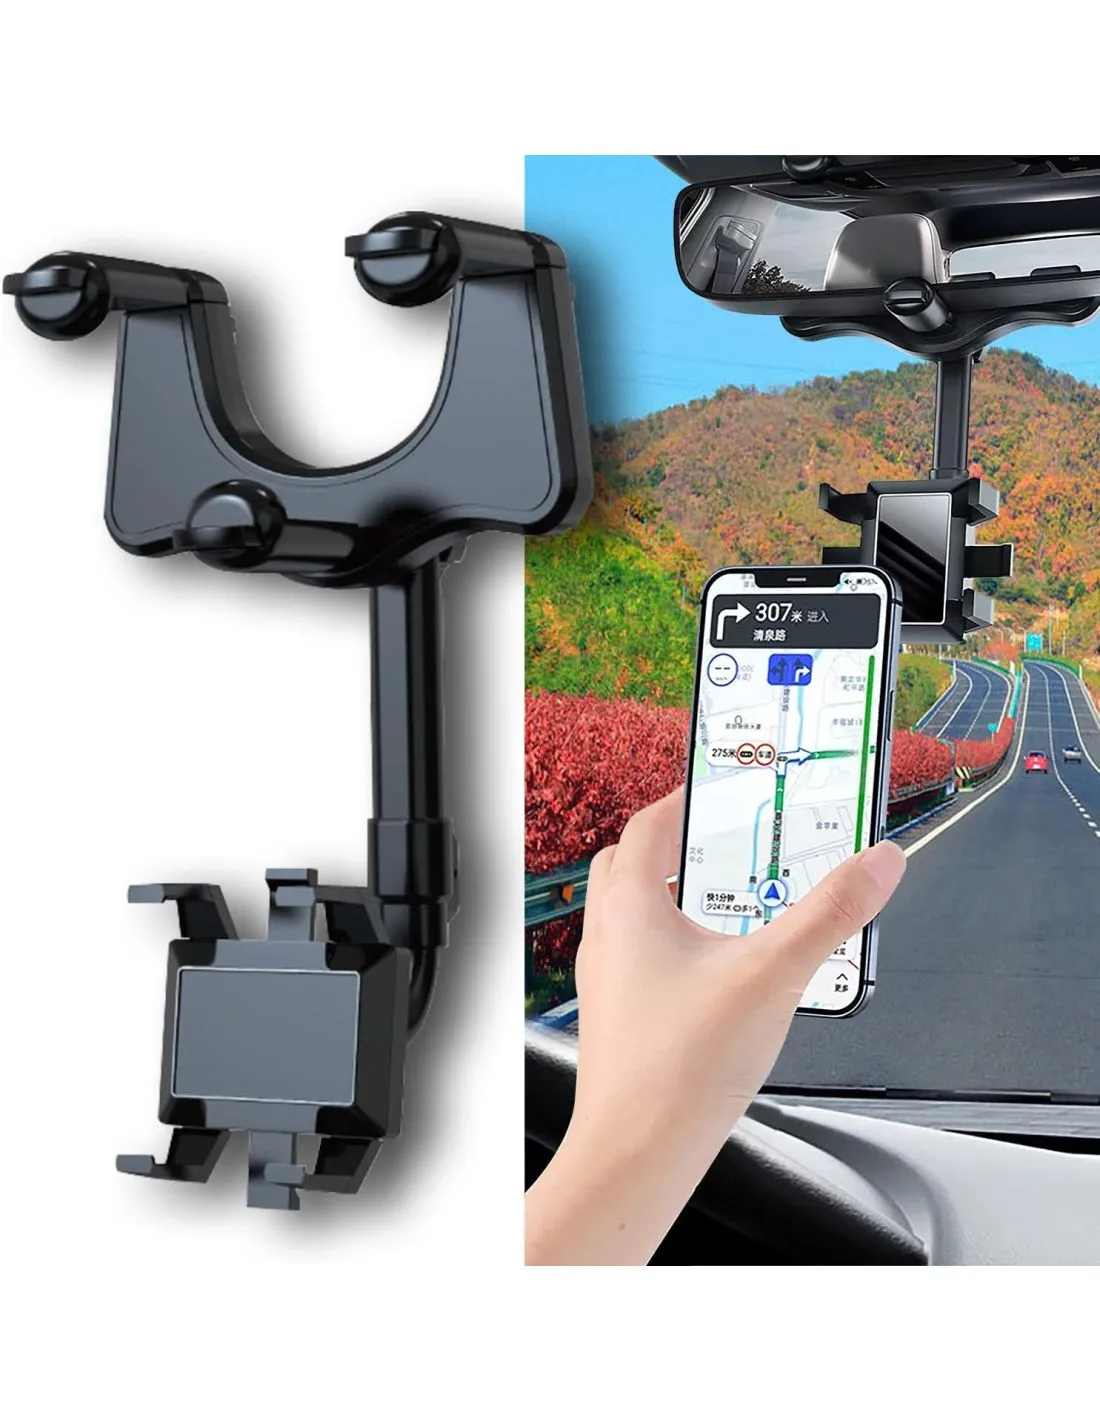 Suport telefon pentru oglinda retrovizoare, suport auto telefon oglinda  Elastix